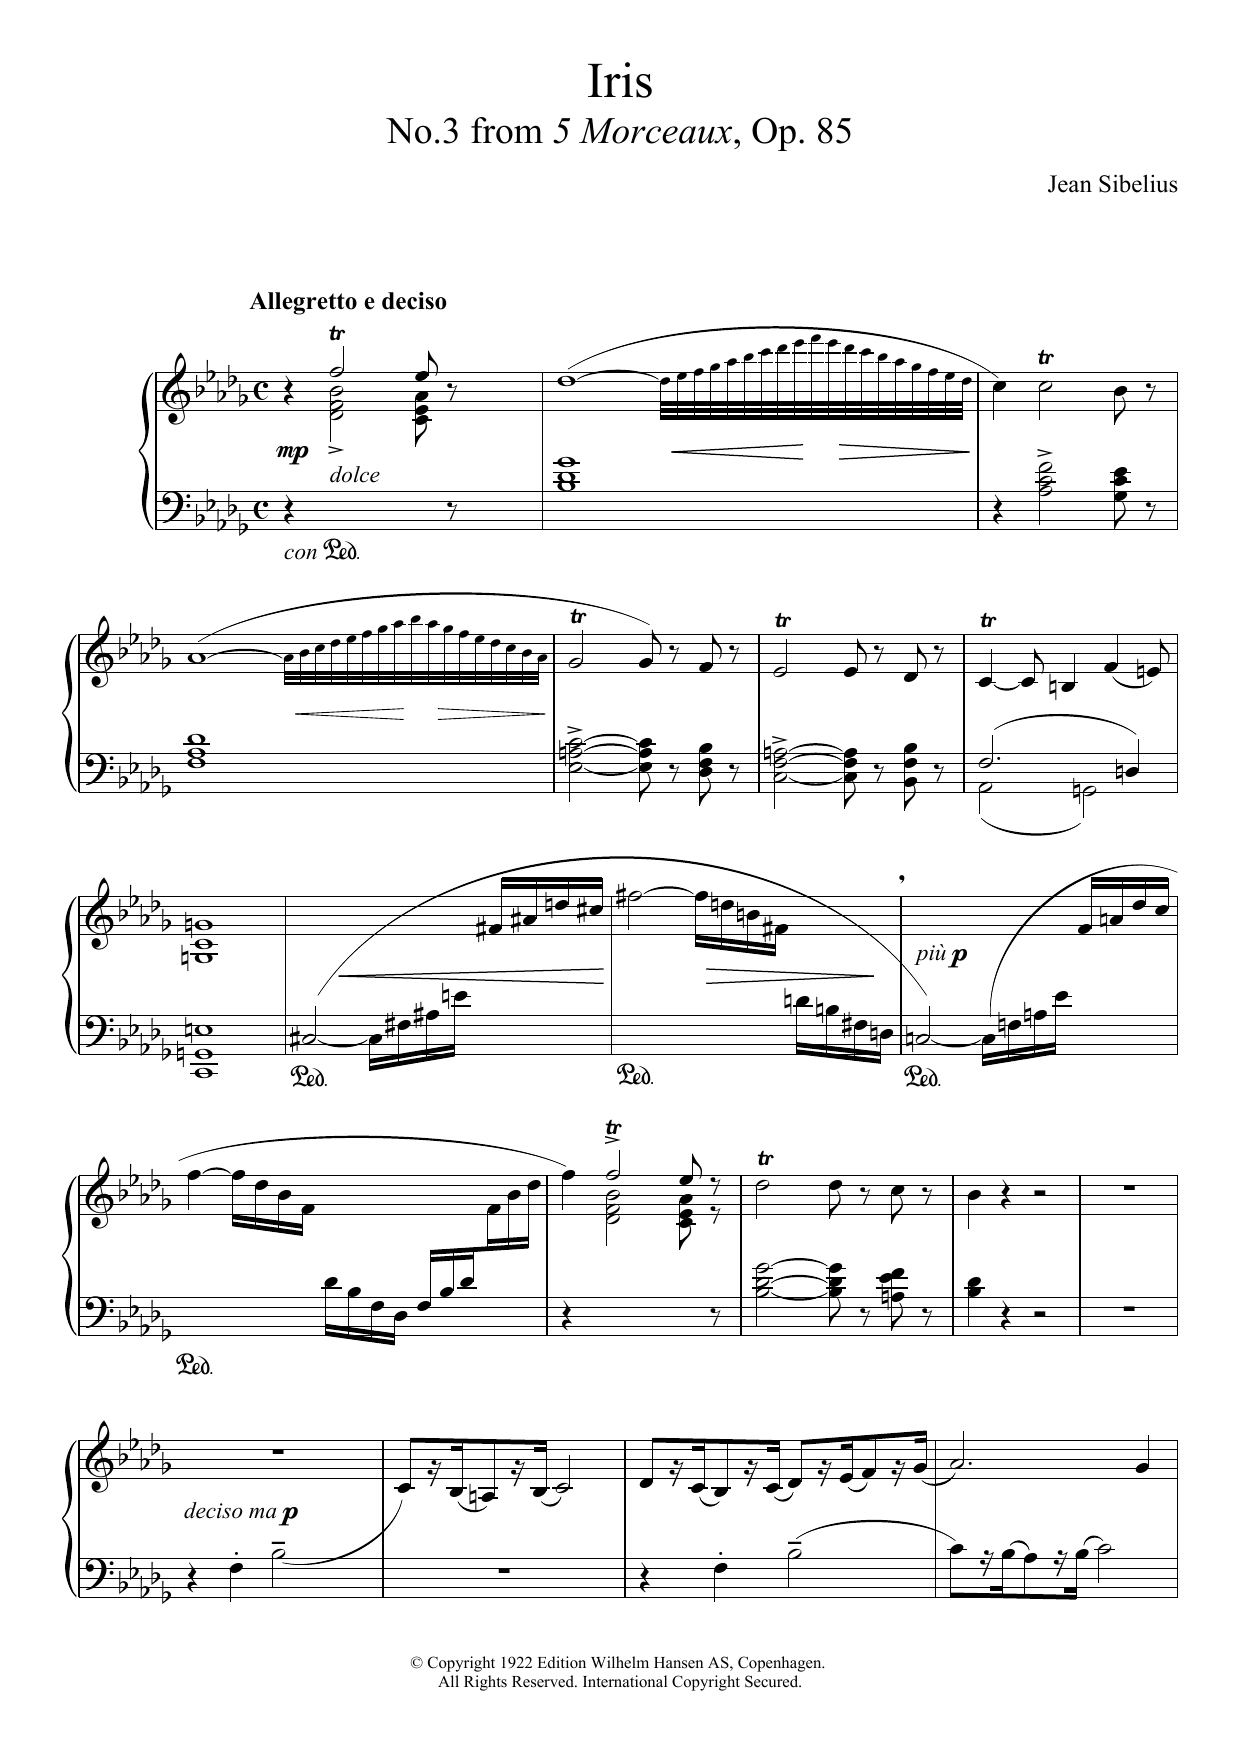 Jean Sibelius 5 Morceaux, Op.85 - III. Iris Sheet Music Notes & Chords for Piano - Download or Print PDF